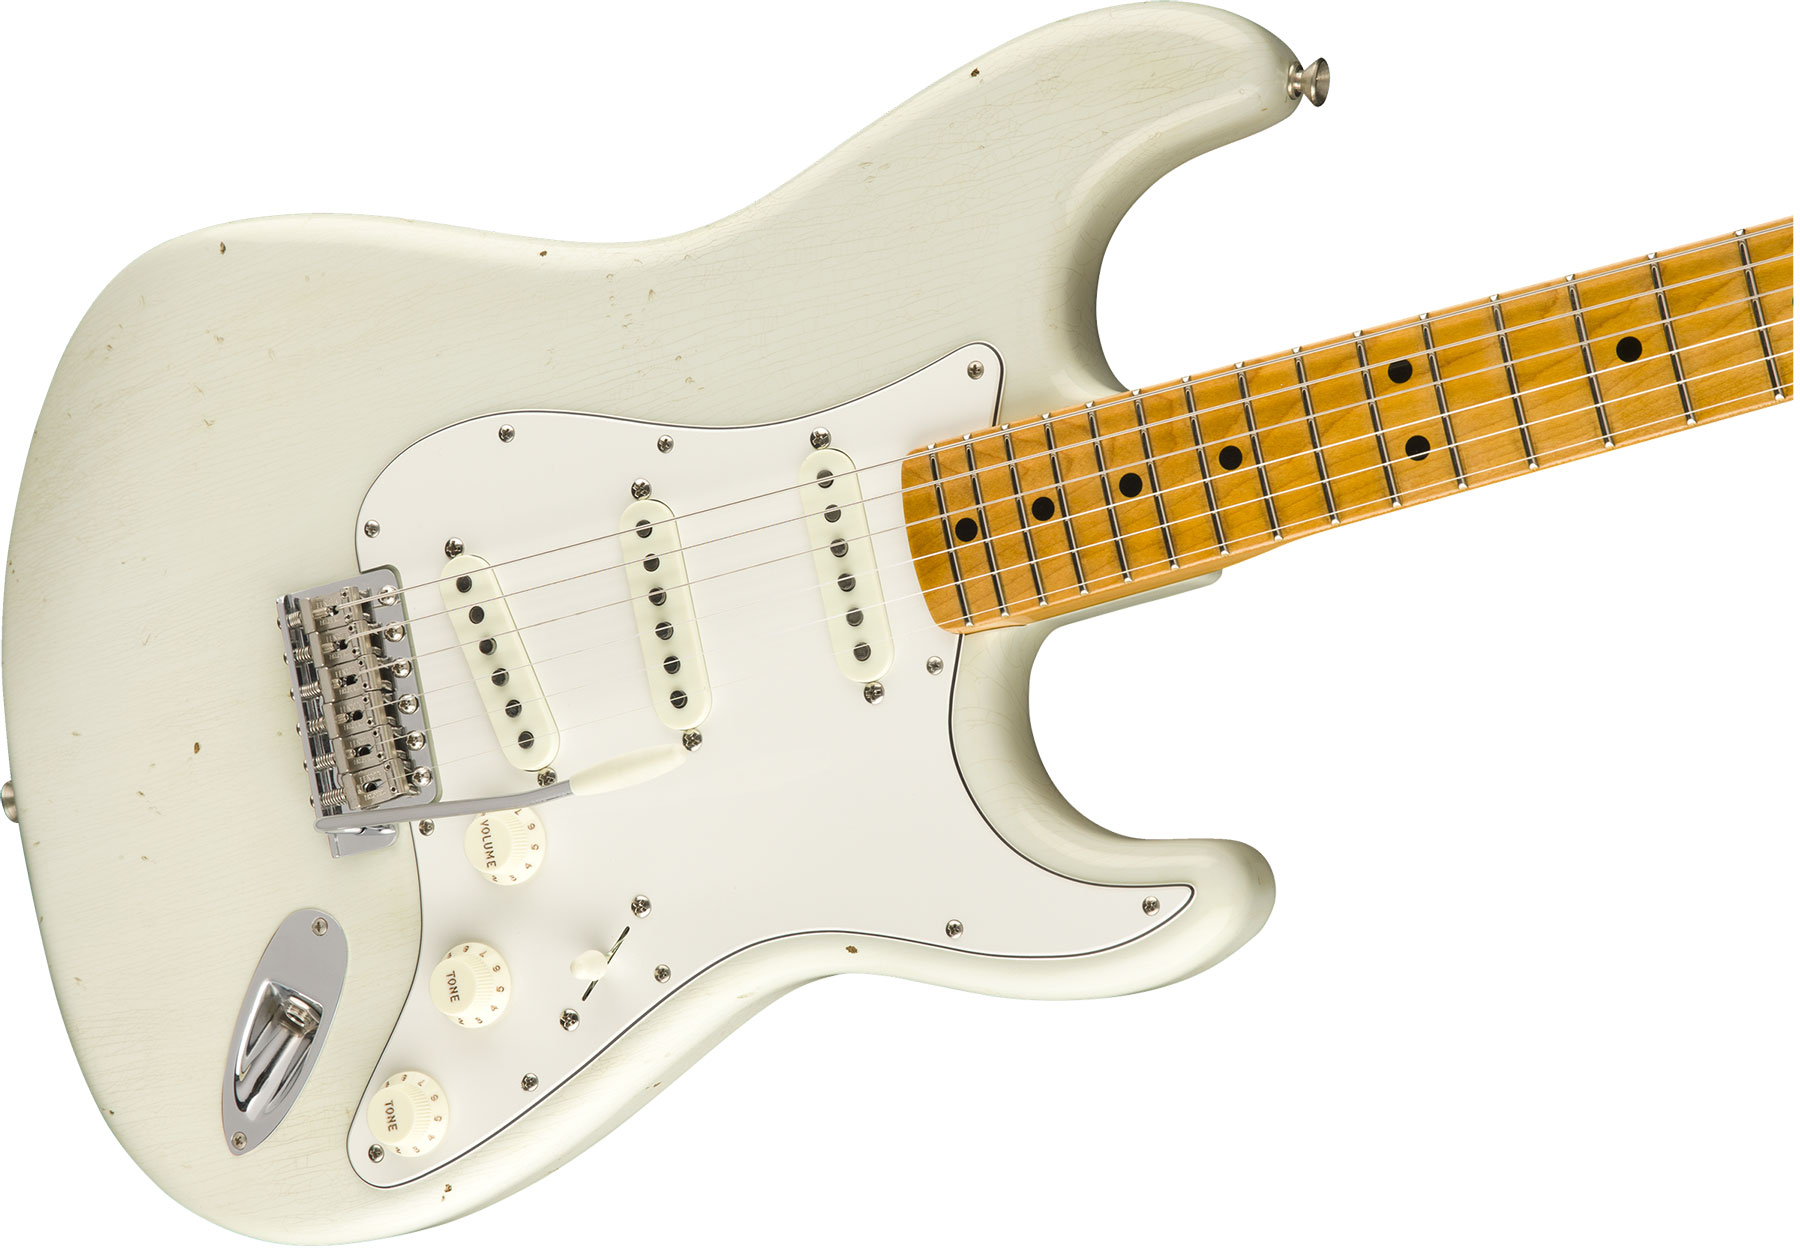 Fender Custom Shop Jimi Hendrix Strat Voodoo Child Signature 2018 Mn - Journeyman Relic Olympic White - Str shape electric guitar - Variation 2